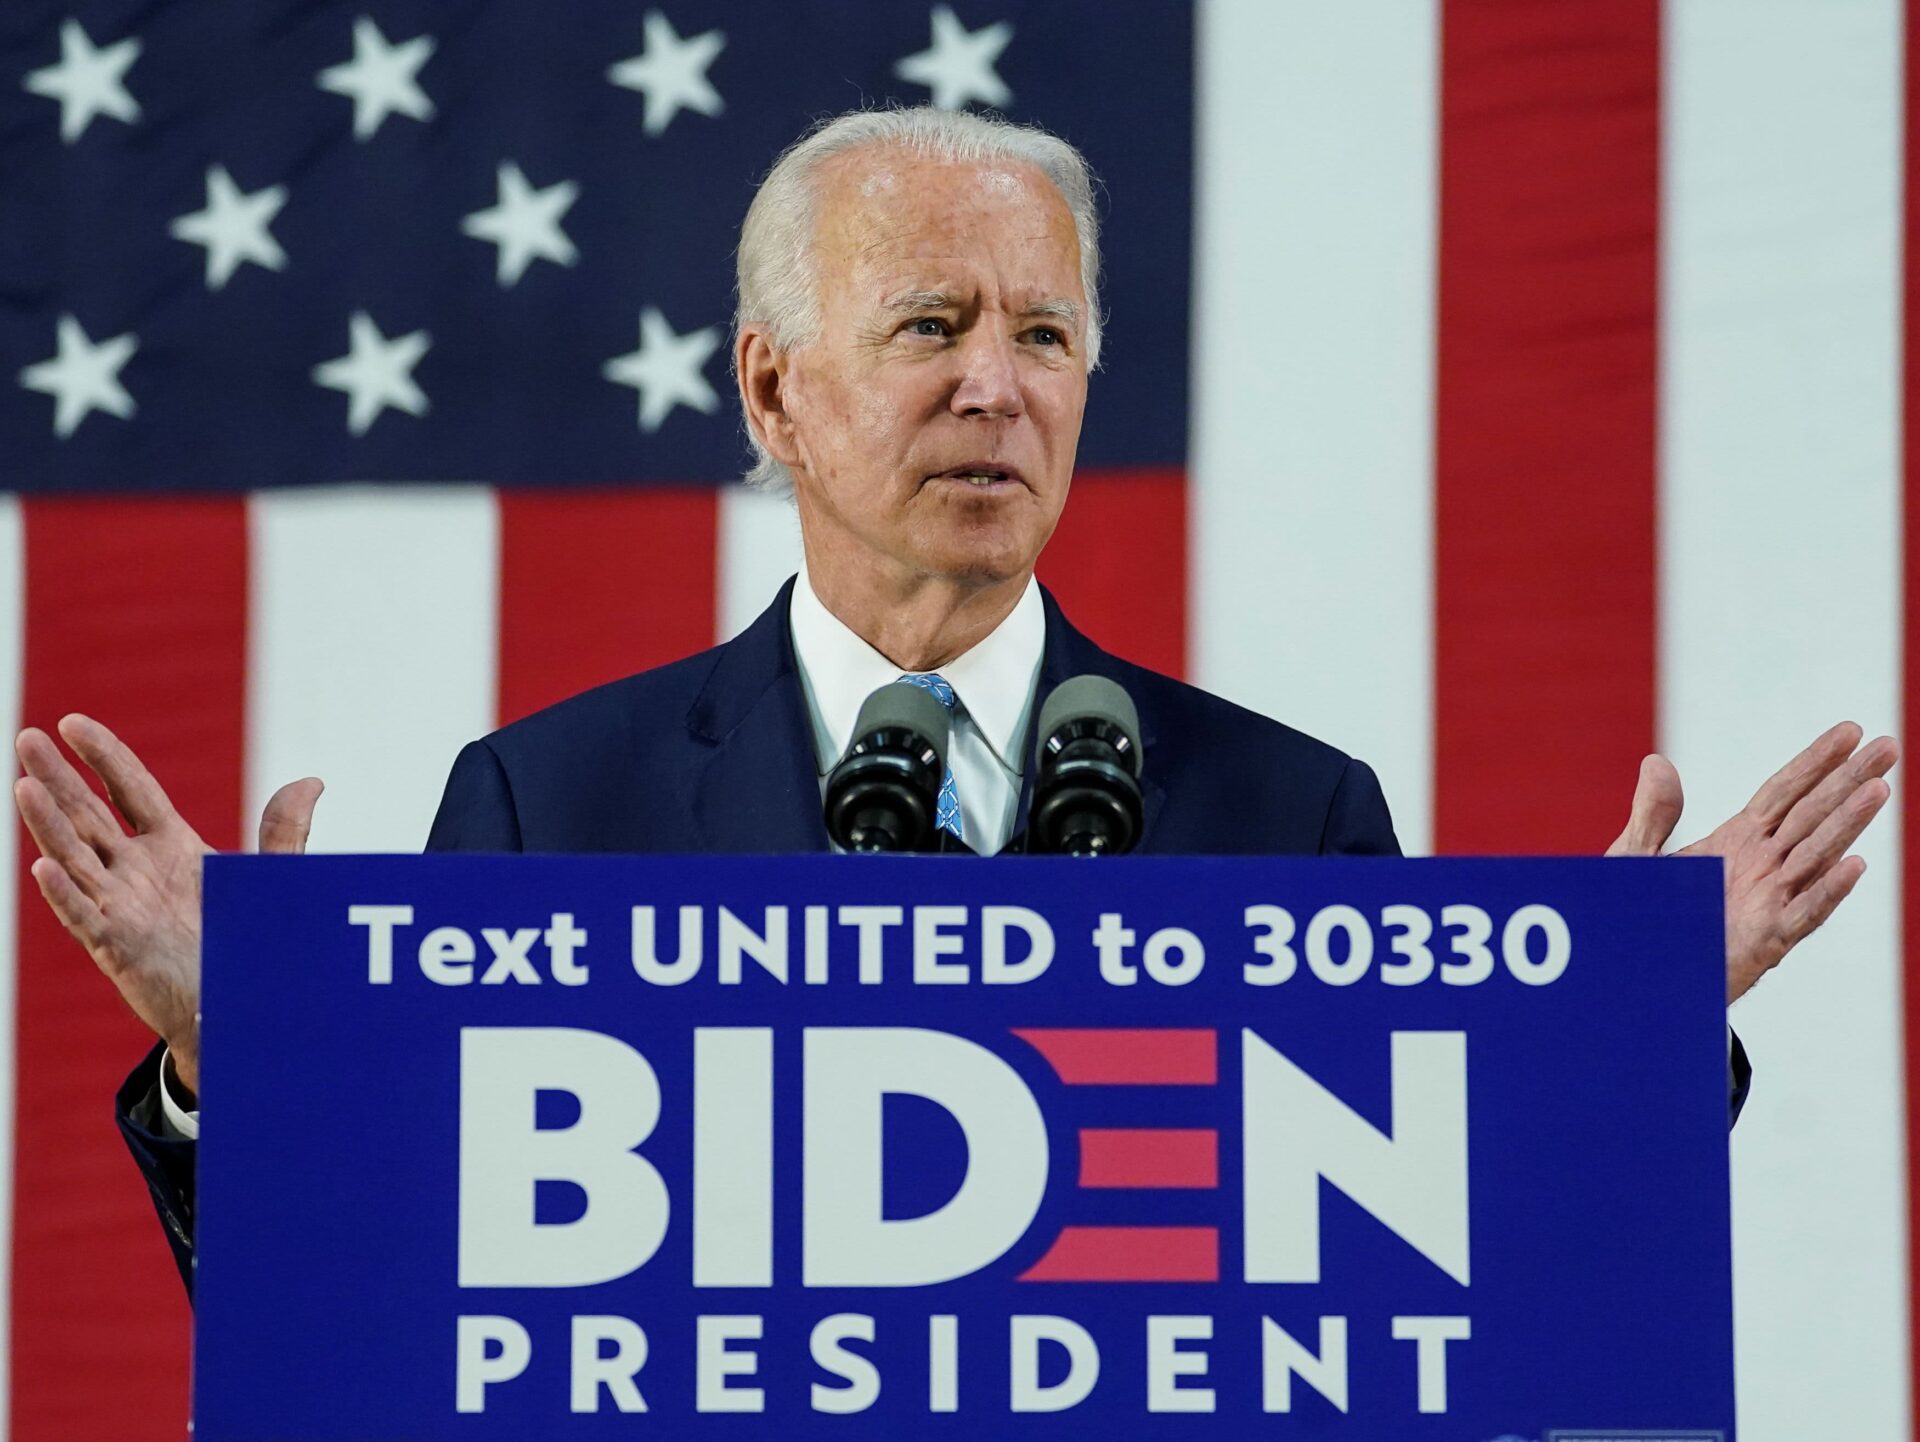 Joe Biden's presidential campaign